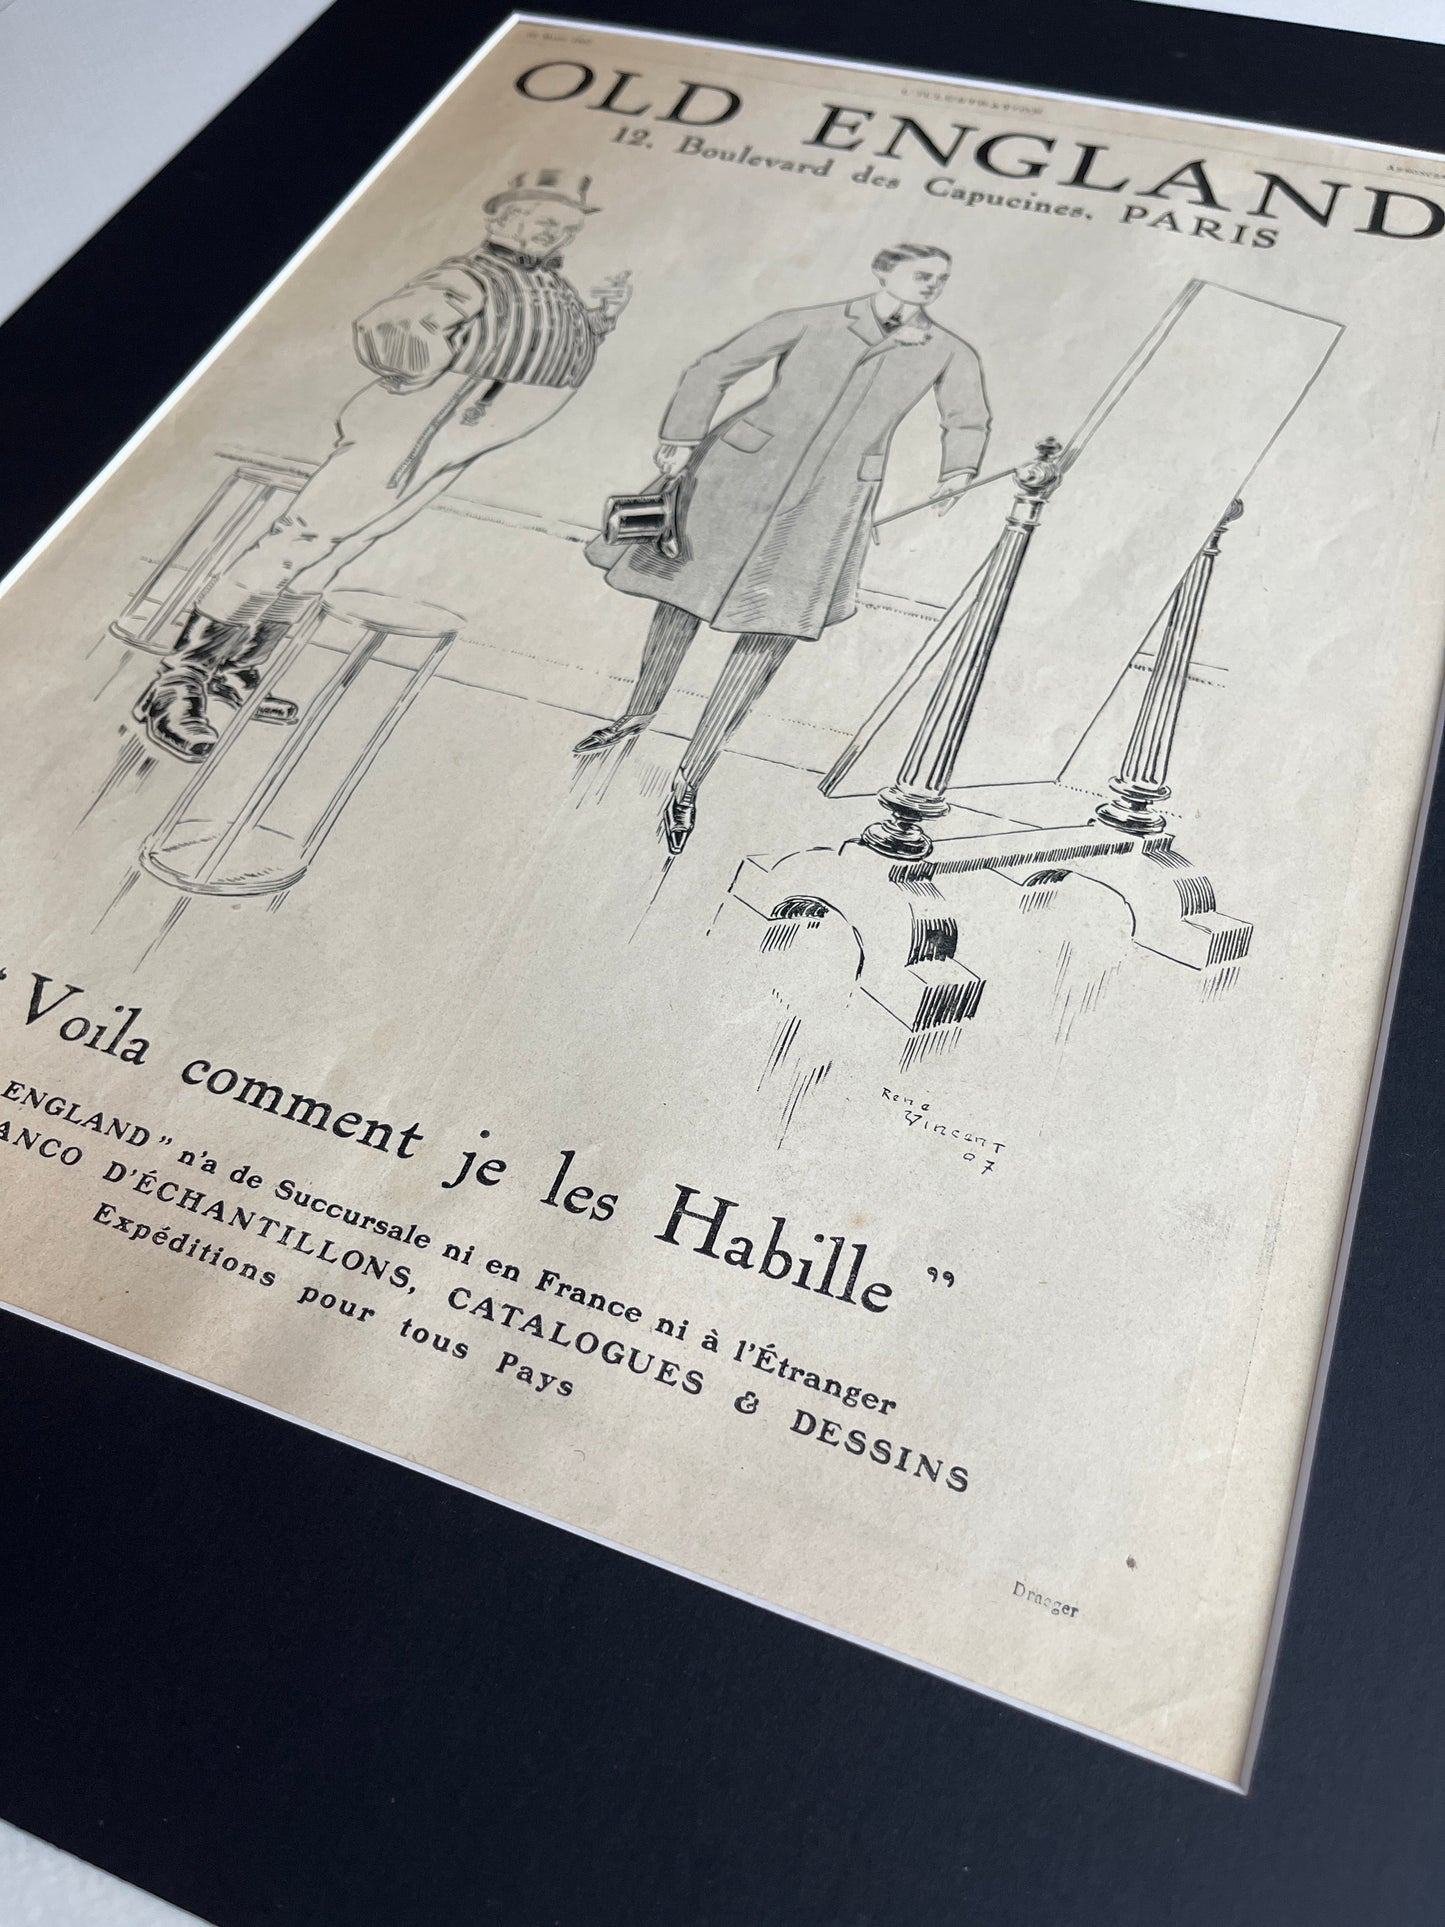 Franse reclame: Old England (L’illustration uit 1907)